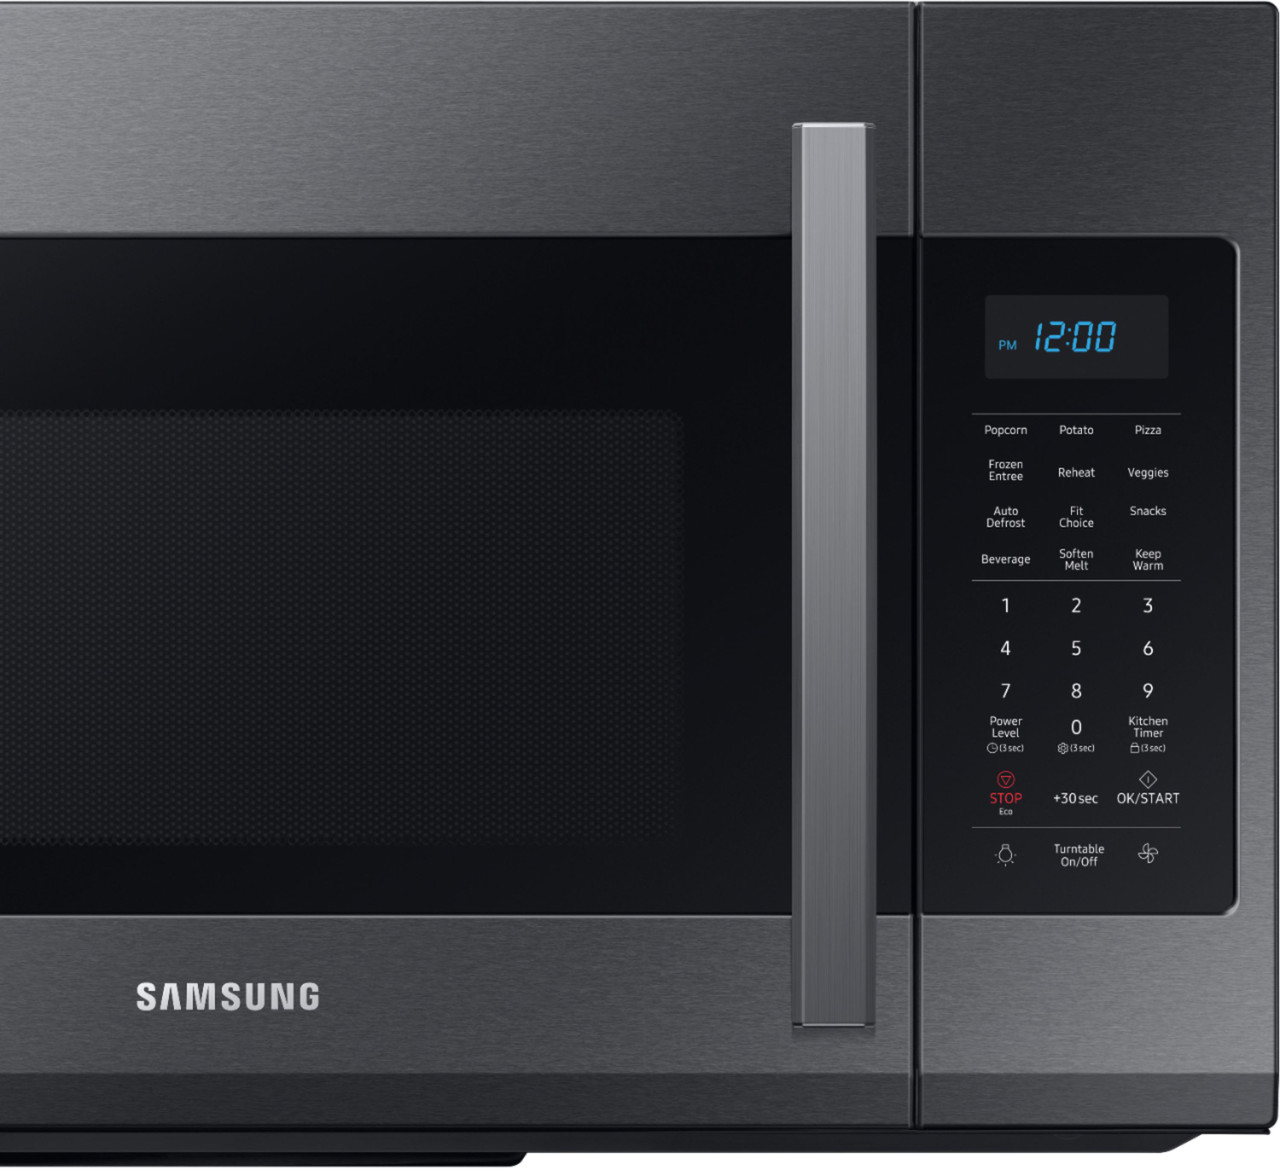 Samsung - 1.9 Cu. Ft. Over-the-Range Microwave with Sensor Cooking - Fingerprint Resistant Black Stainless Steel